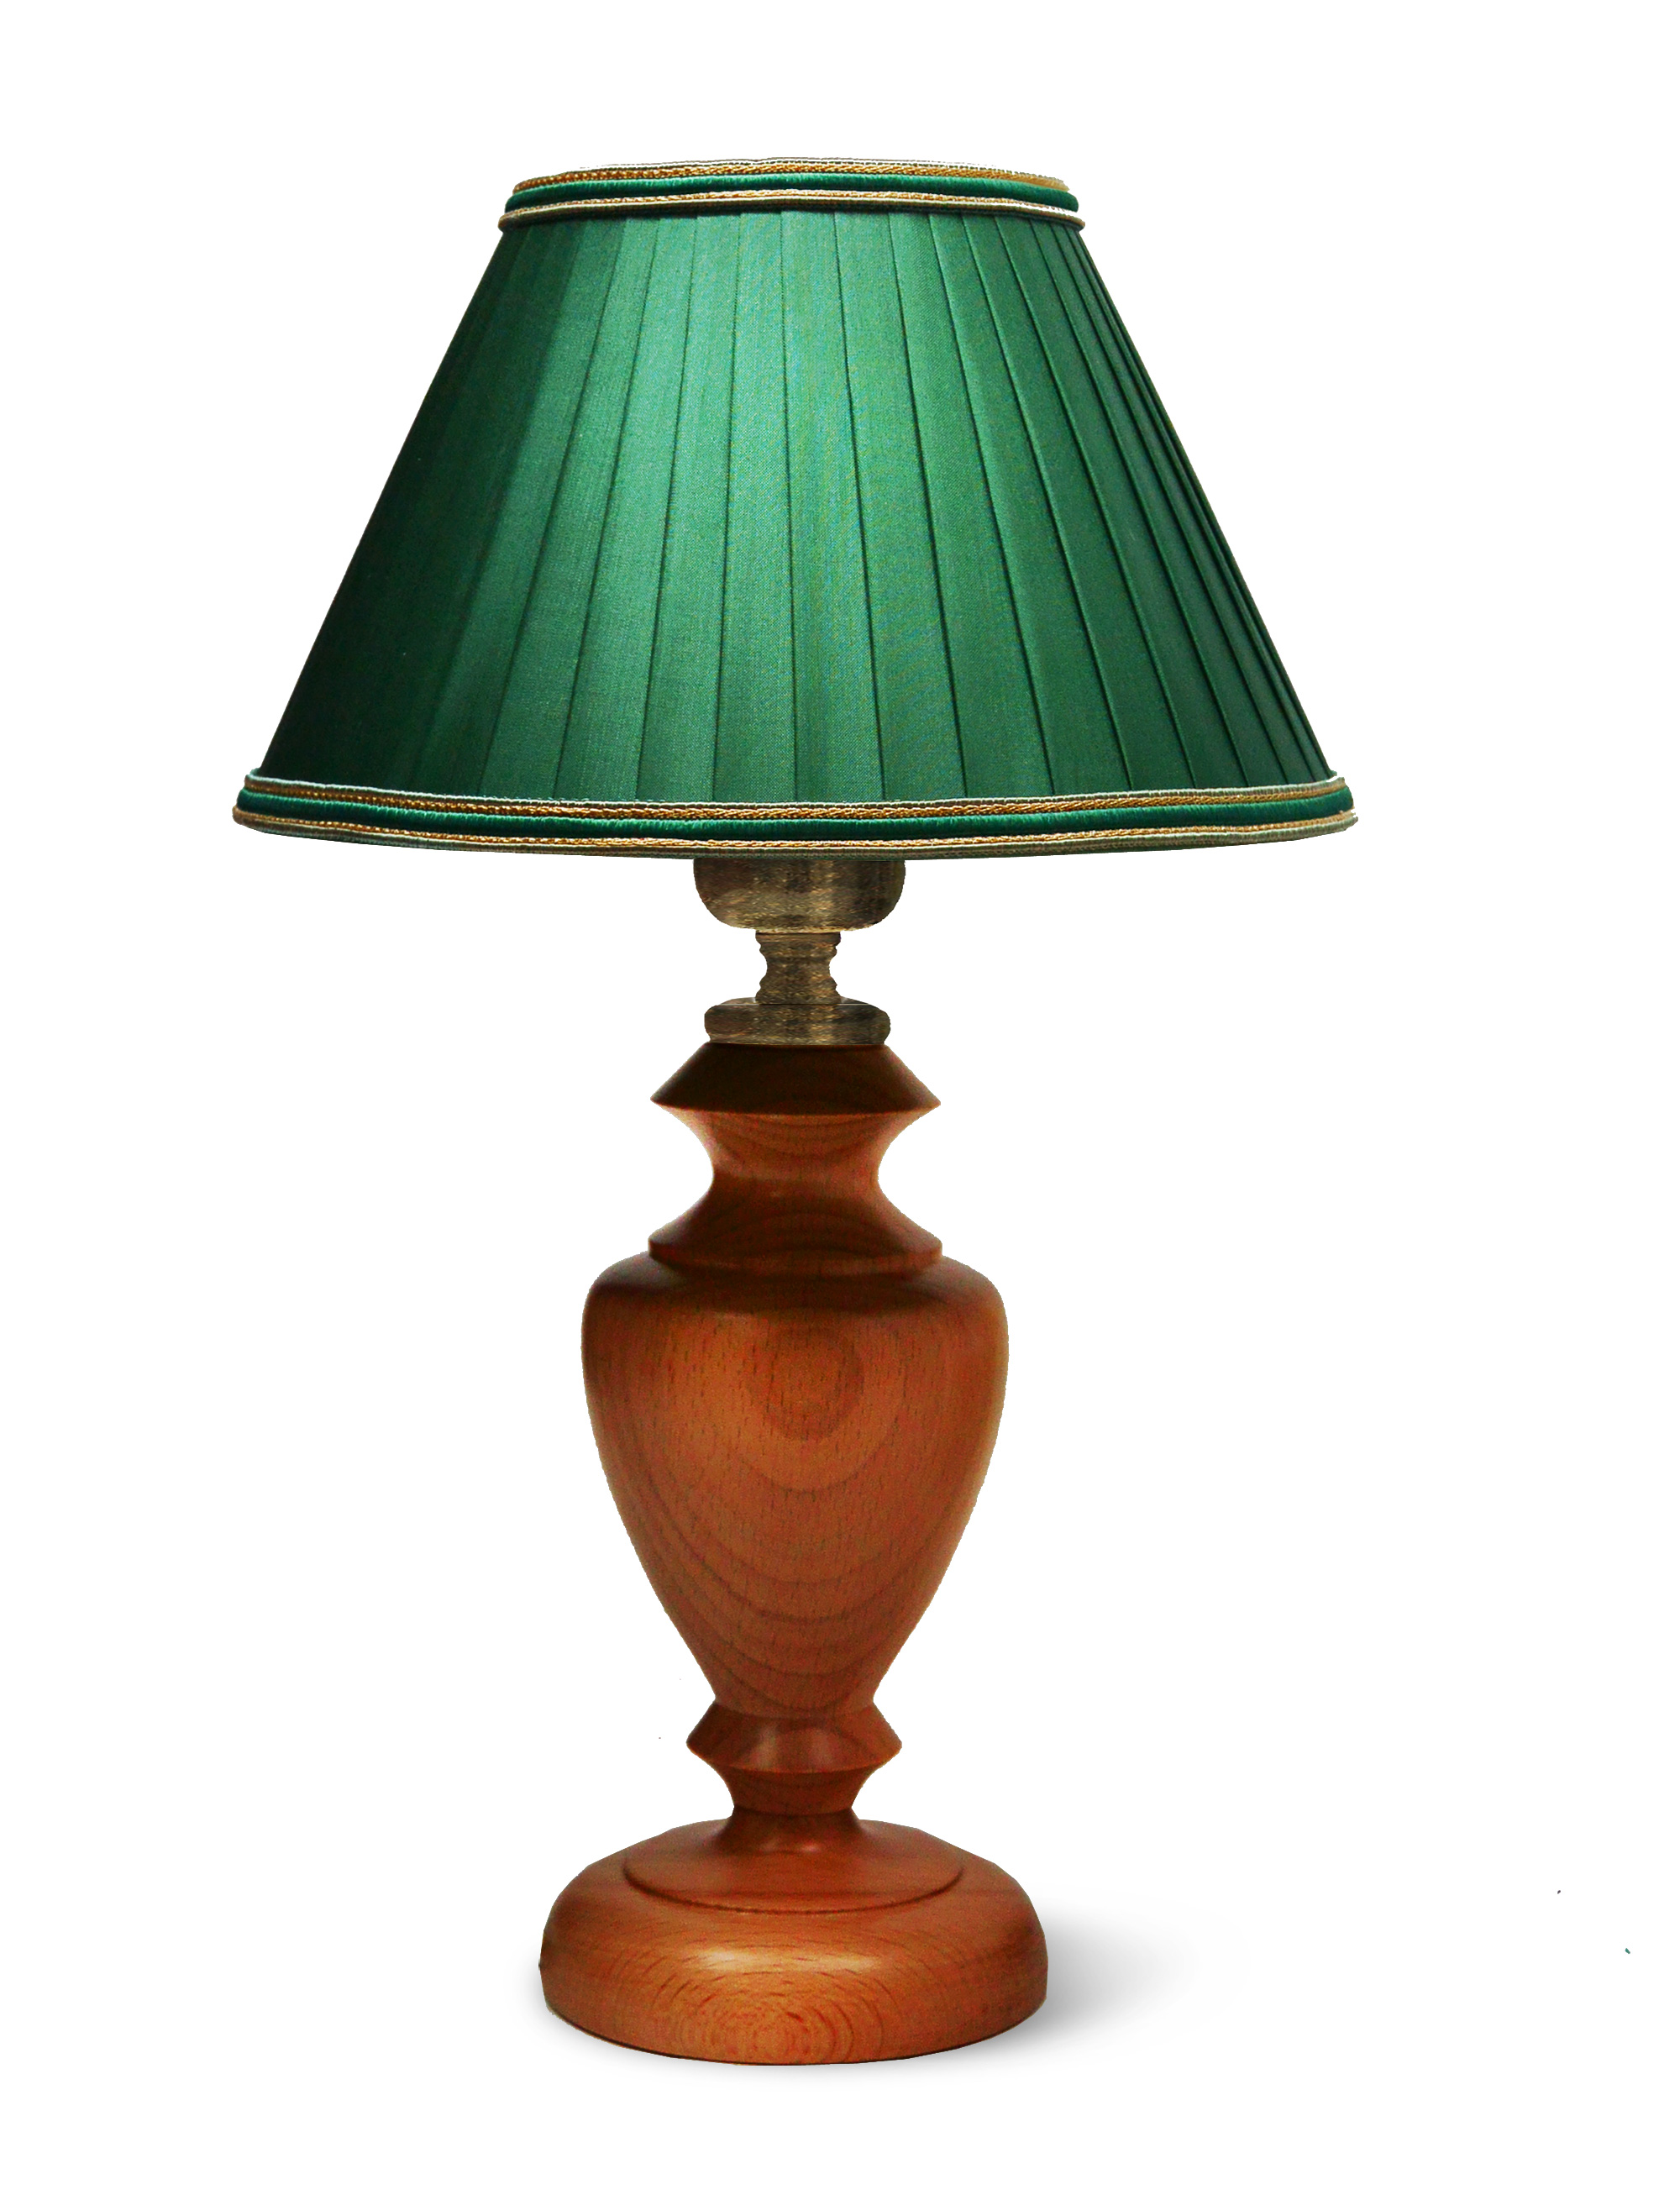 Настольные лампы с зеленым абажуром купить. Лампа с зеленым абажуром. Торшер настольный. Настольная лампа с абажуром. Настольная лампа с зеленым абажуром.